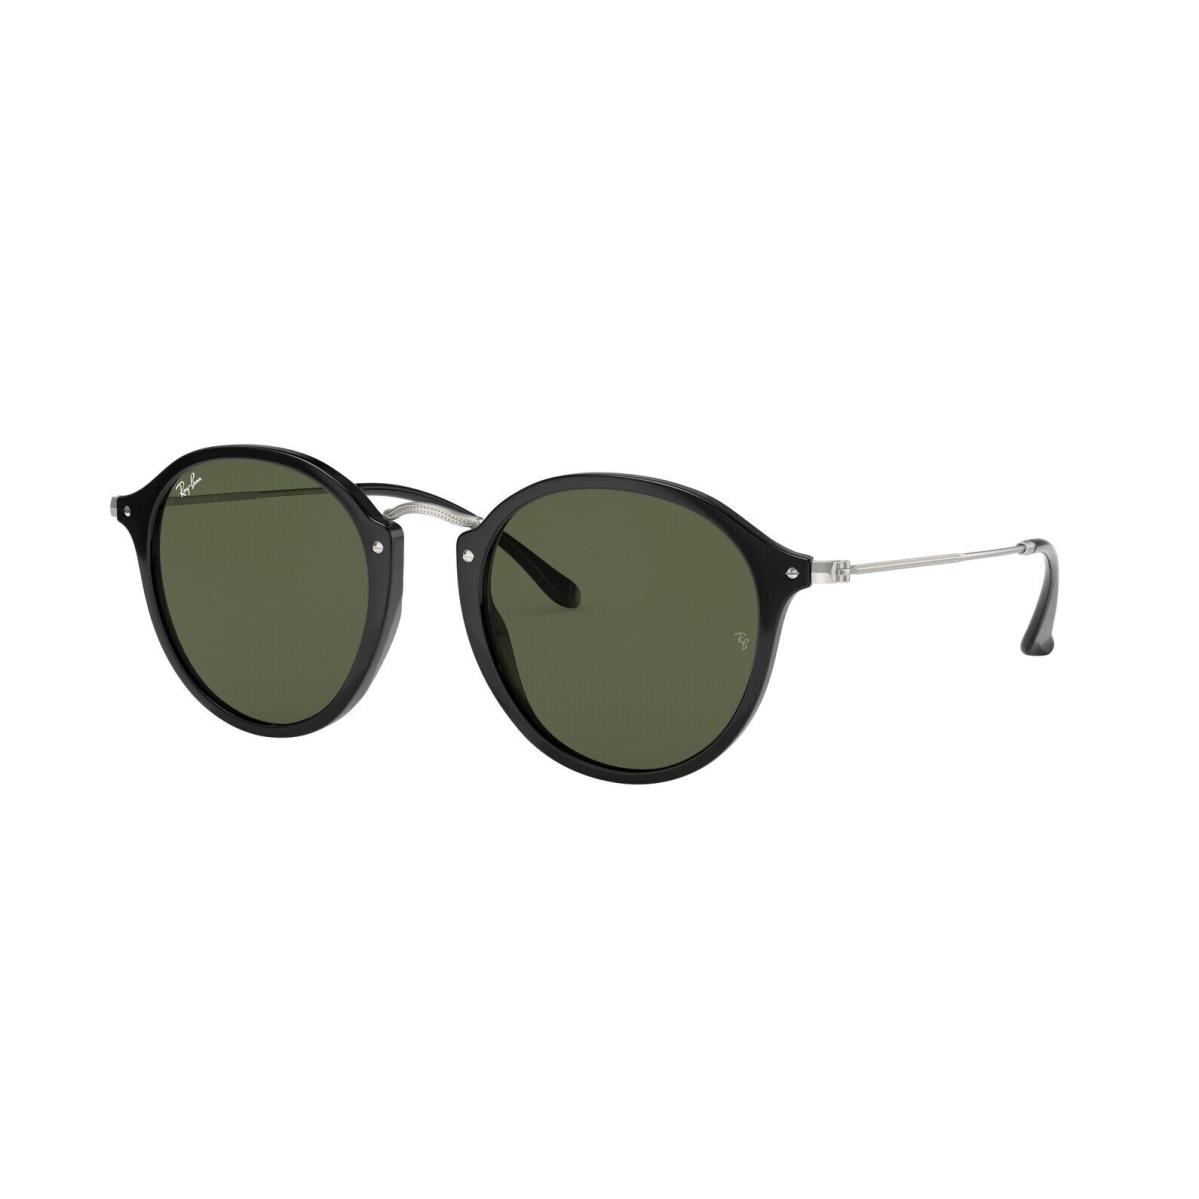 Ray Ban Round Sunglasses - Women`s - Black w/ G-15 Green